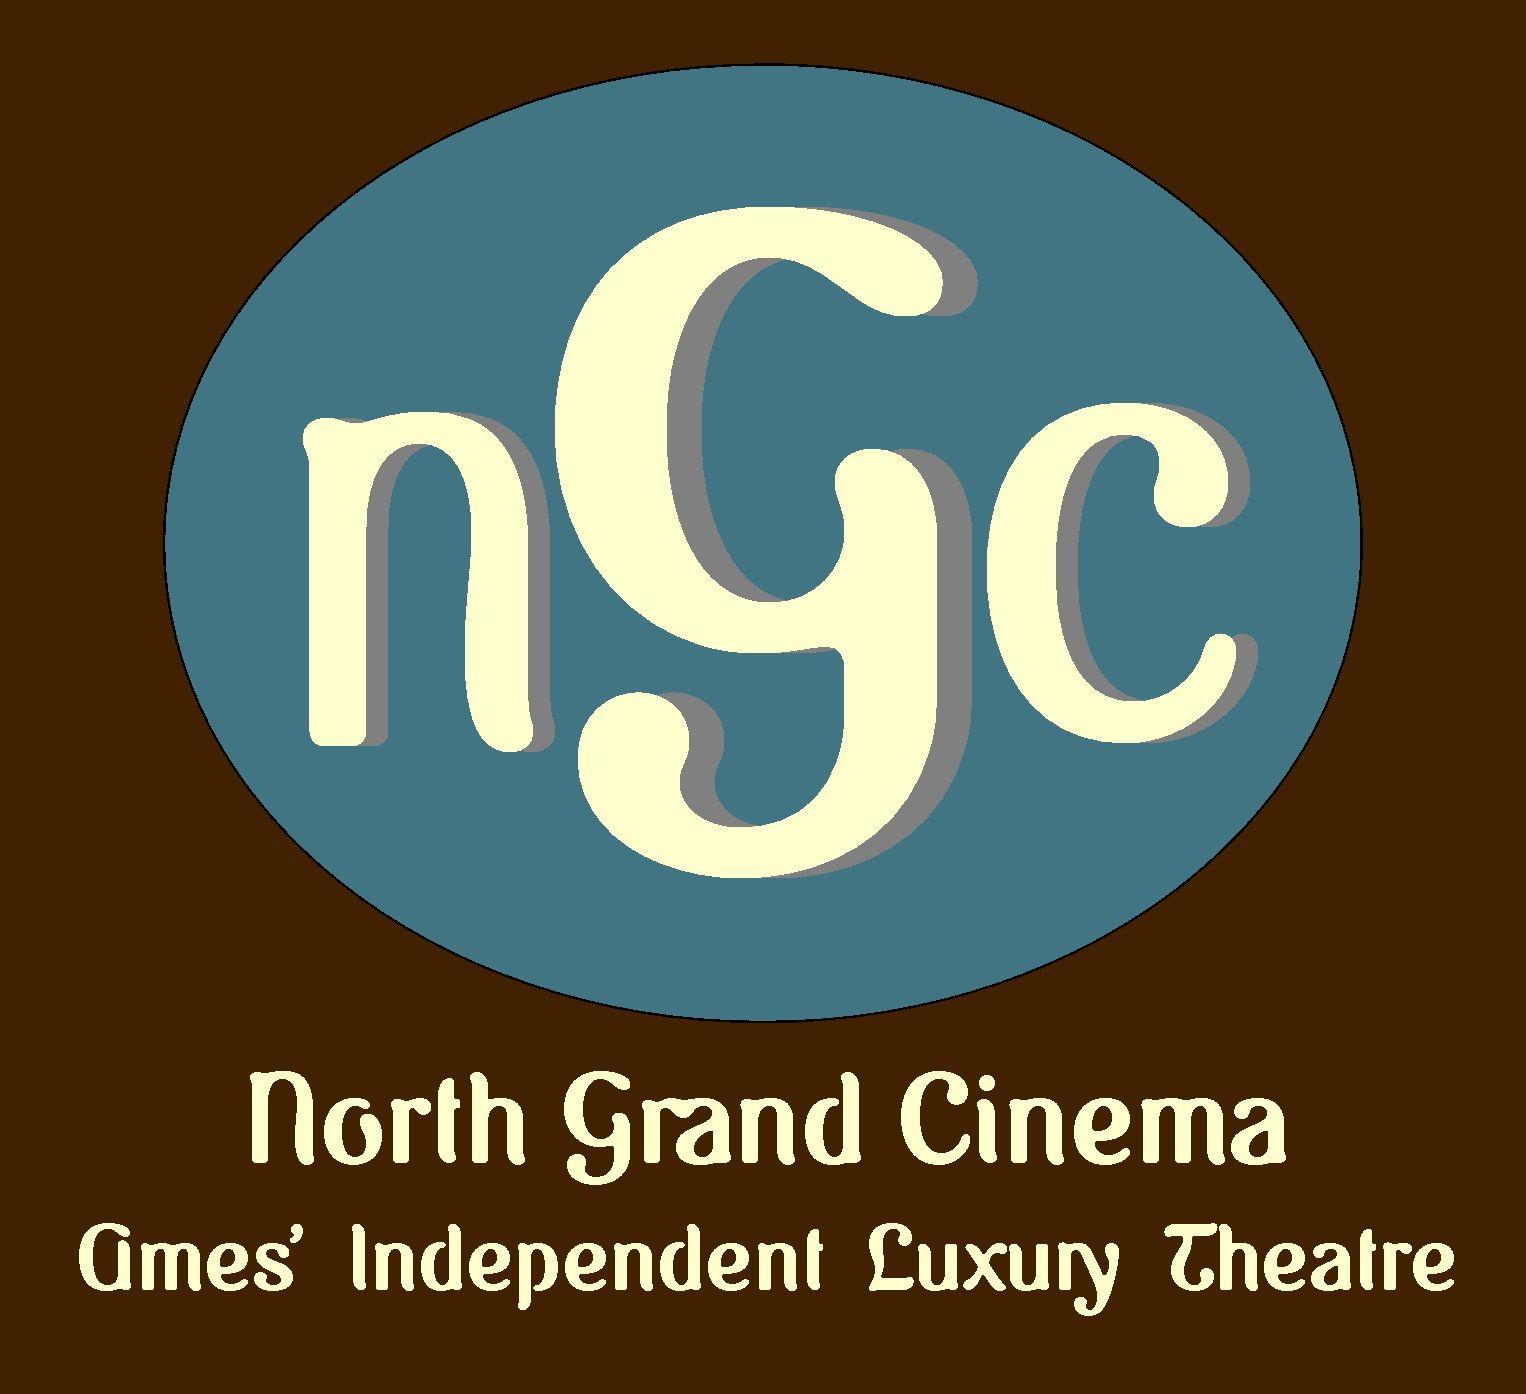 Luxury Cinema Logo - North Grand Cinema